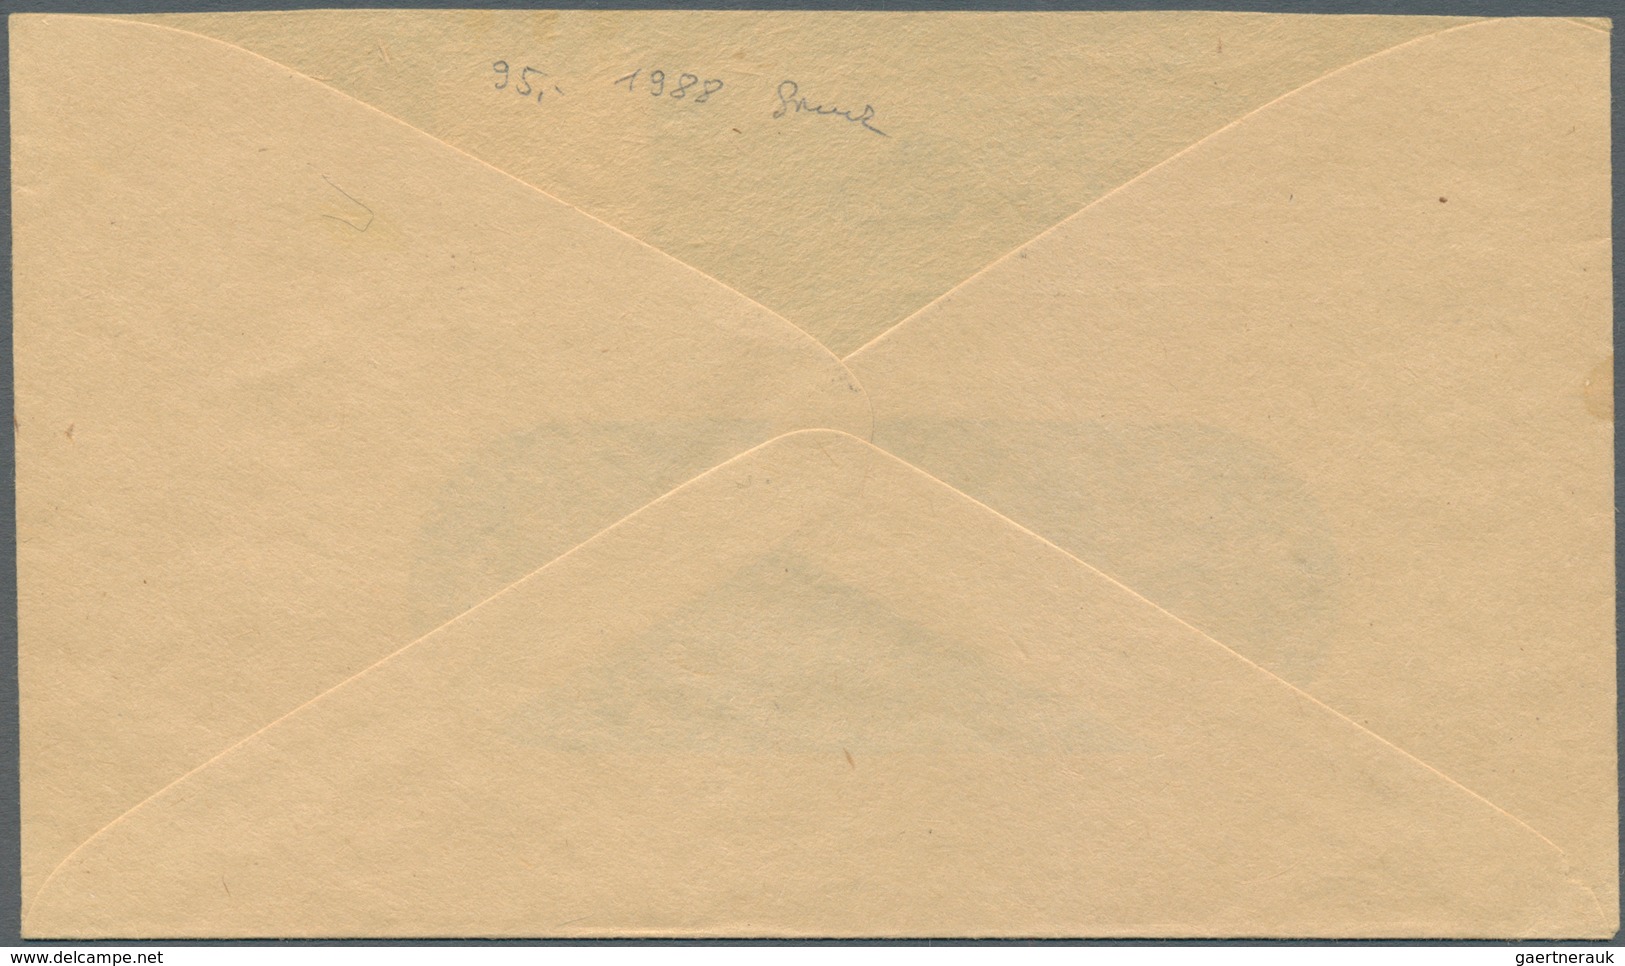 14552 Irland - Ganzsachen: The Walpamur Co. (Ireland) Ldt., Dublin: 1969, 3d. Blue Window Envelope Without - Ganzsachen